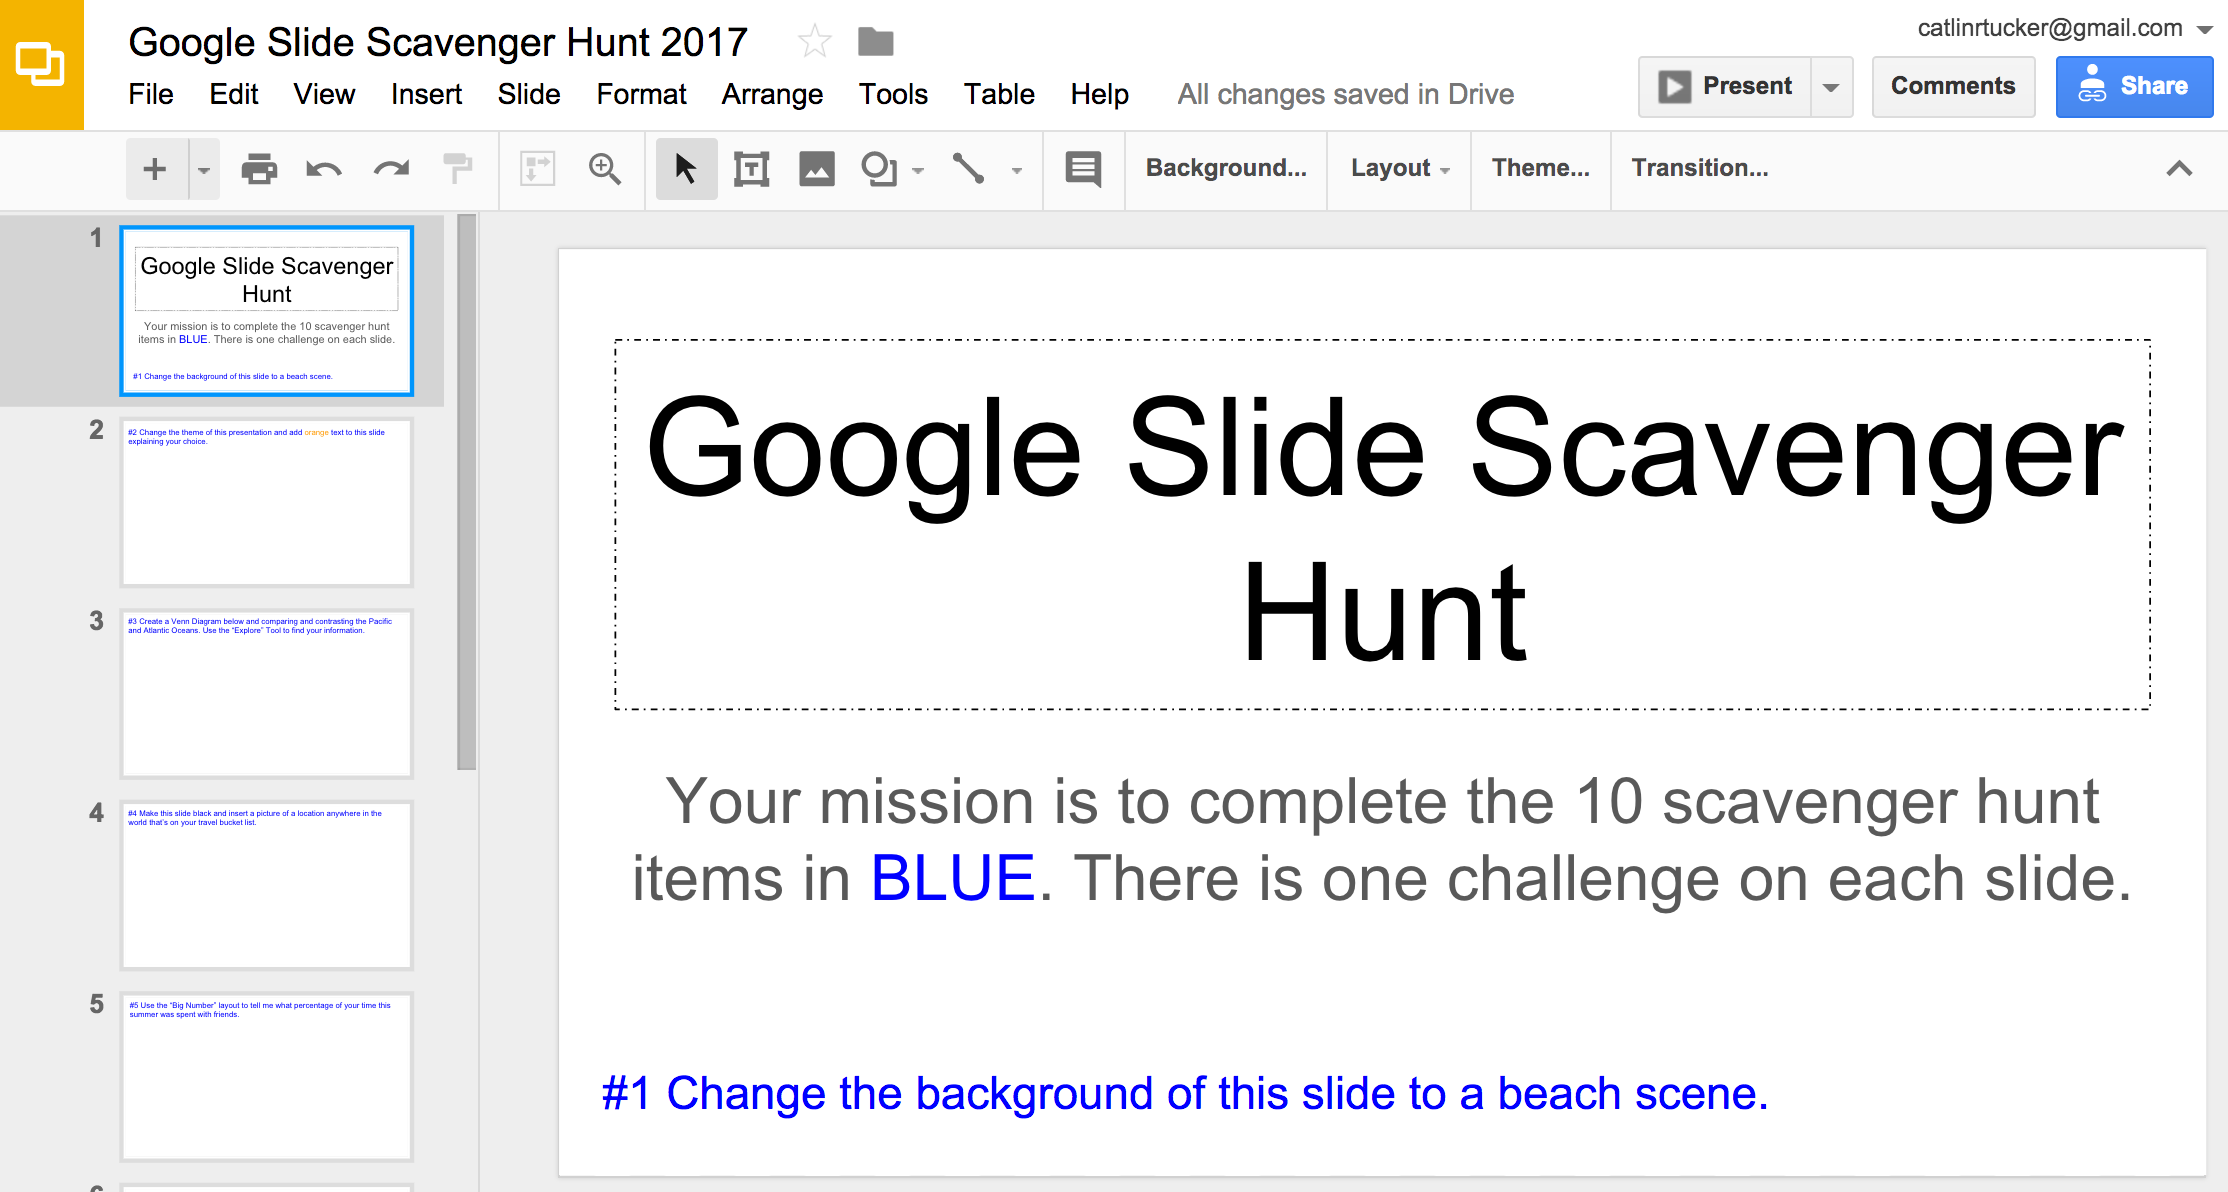 Google Slide Scavenger Hunt